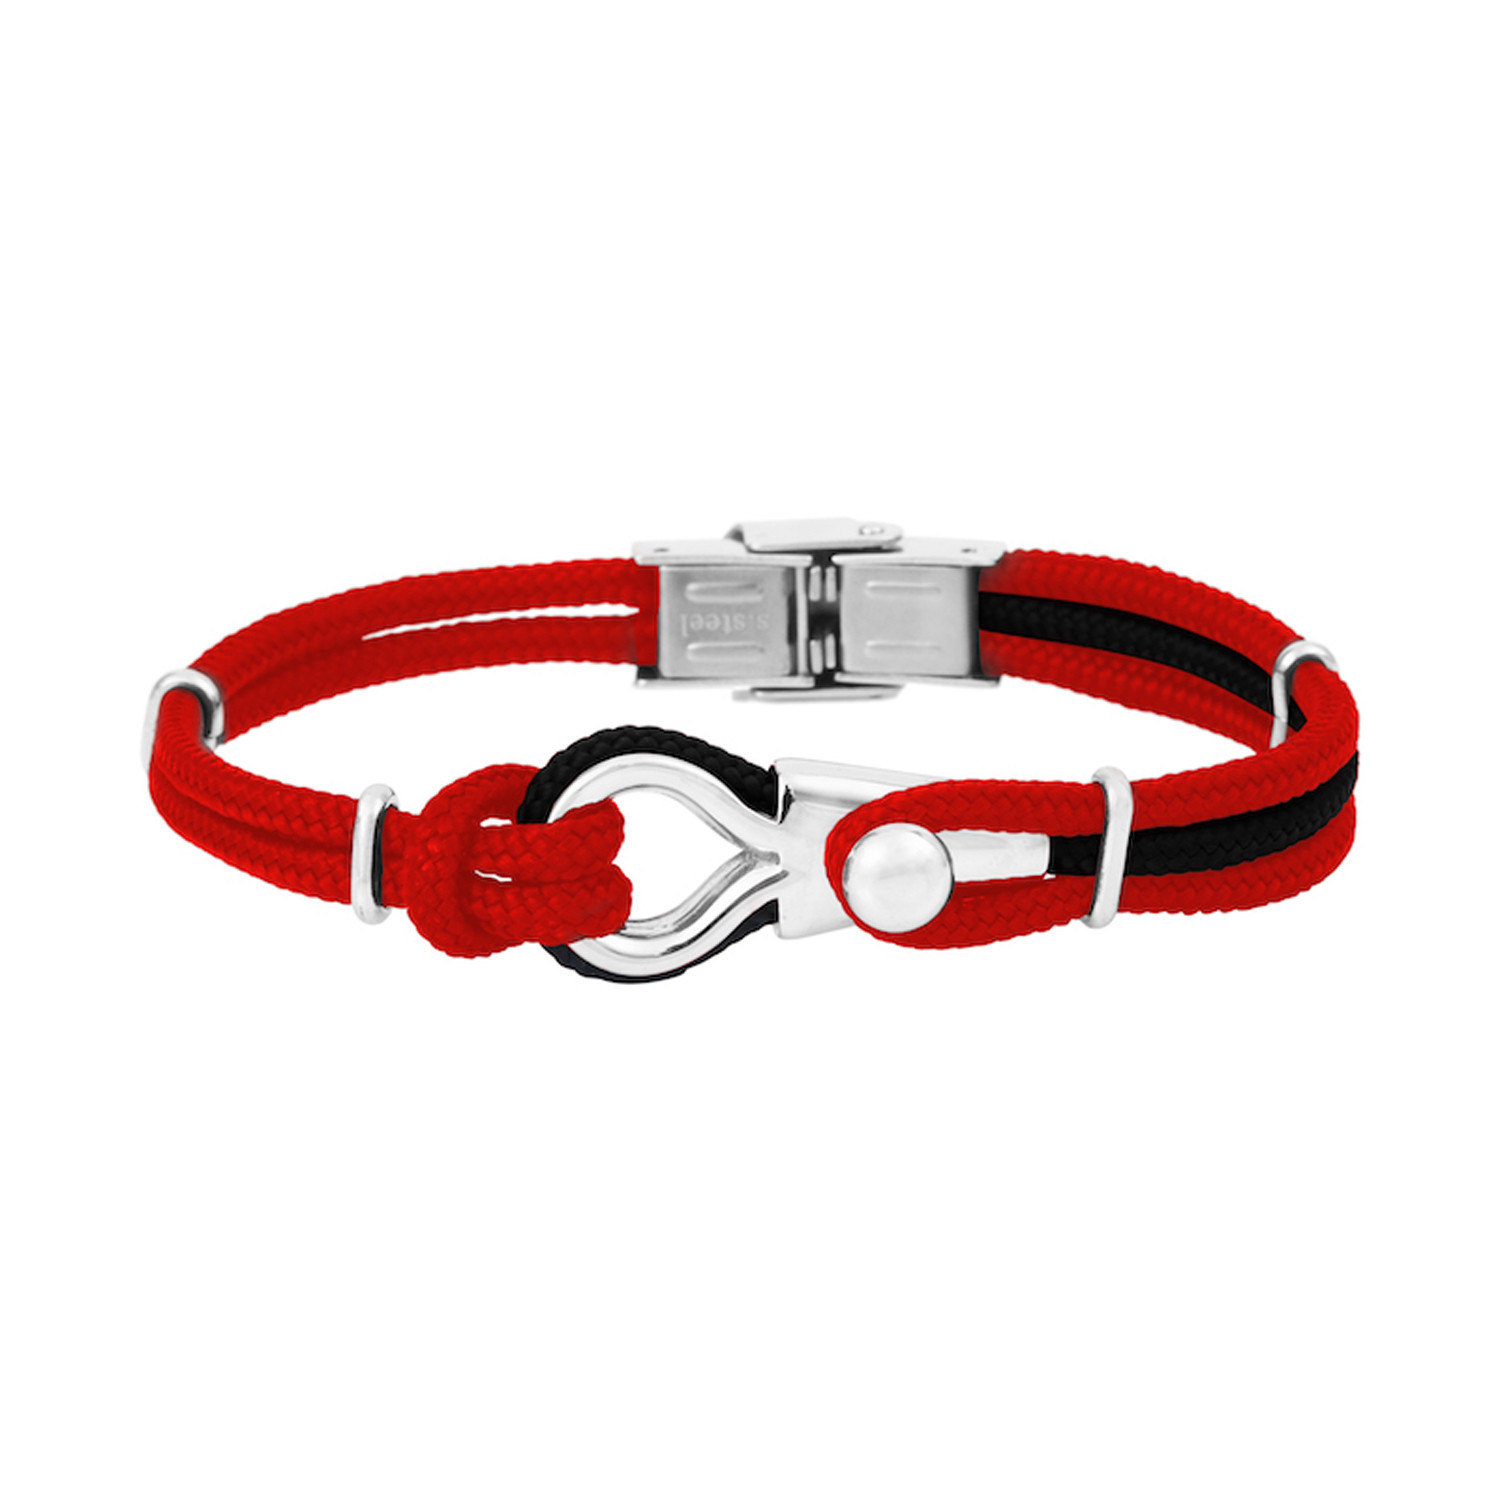 Bracelet Elden Amarre Bollard acier et cordon marin
rouge/noir